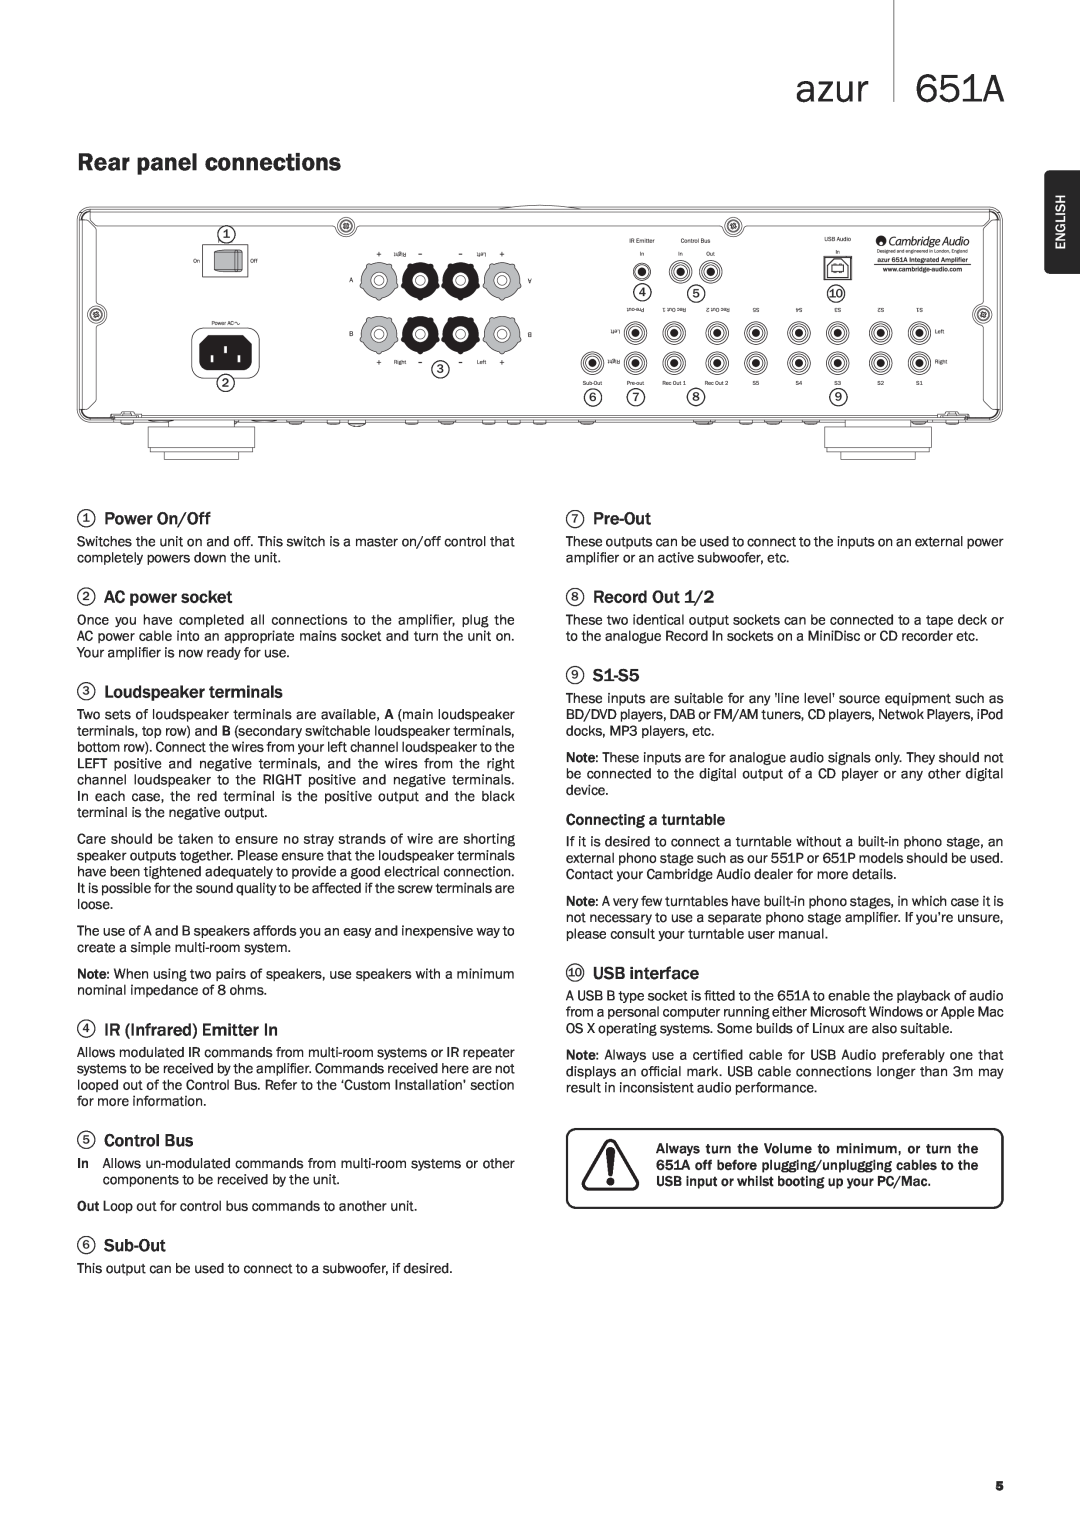 Cambridge Audio user manual Rear panel connections, azur 651A 